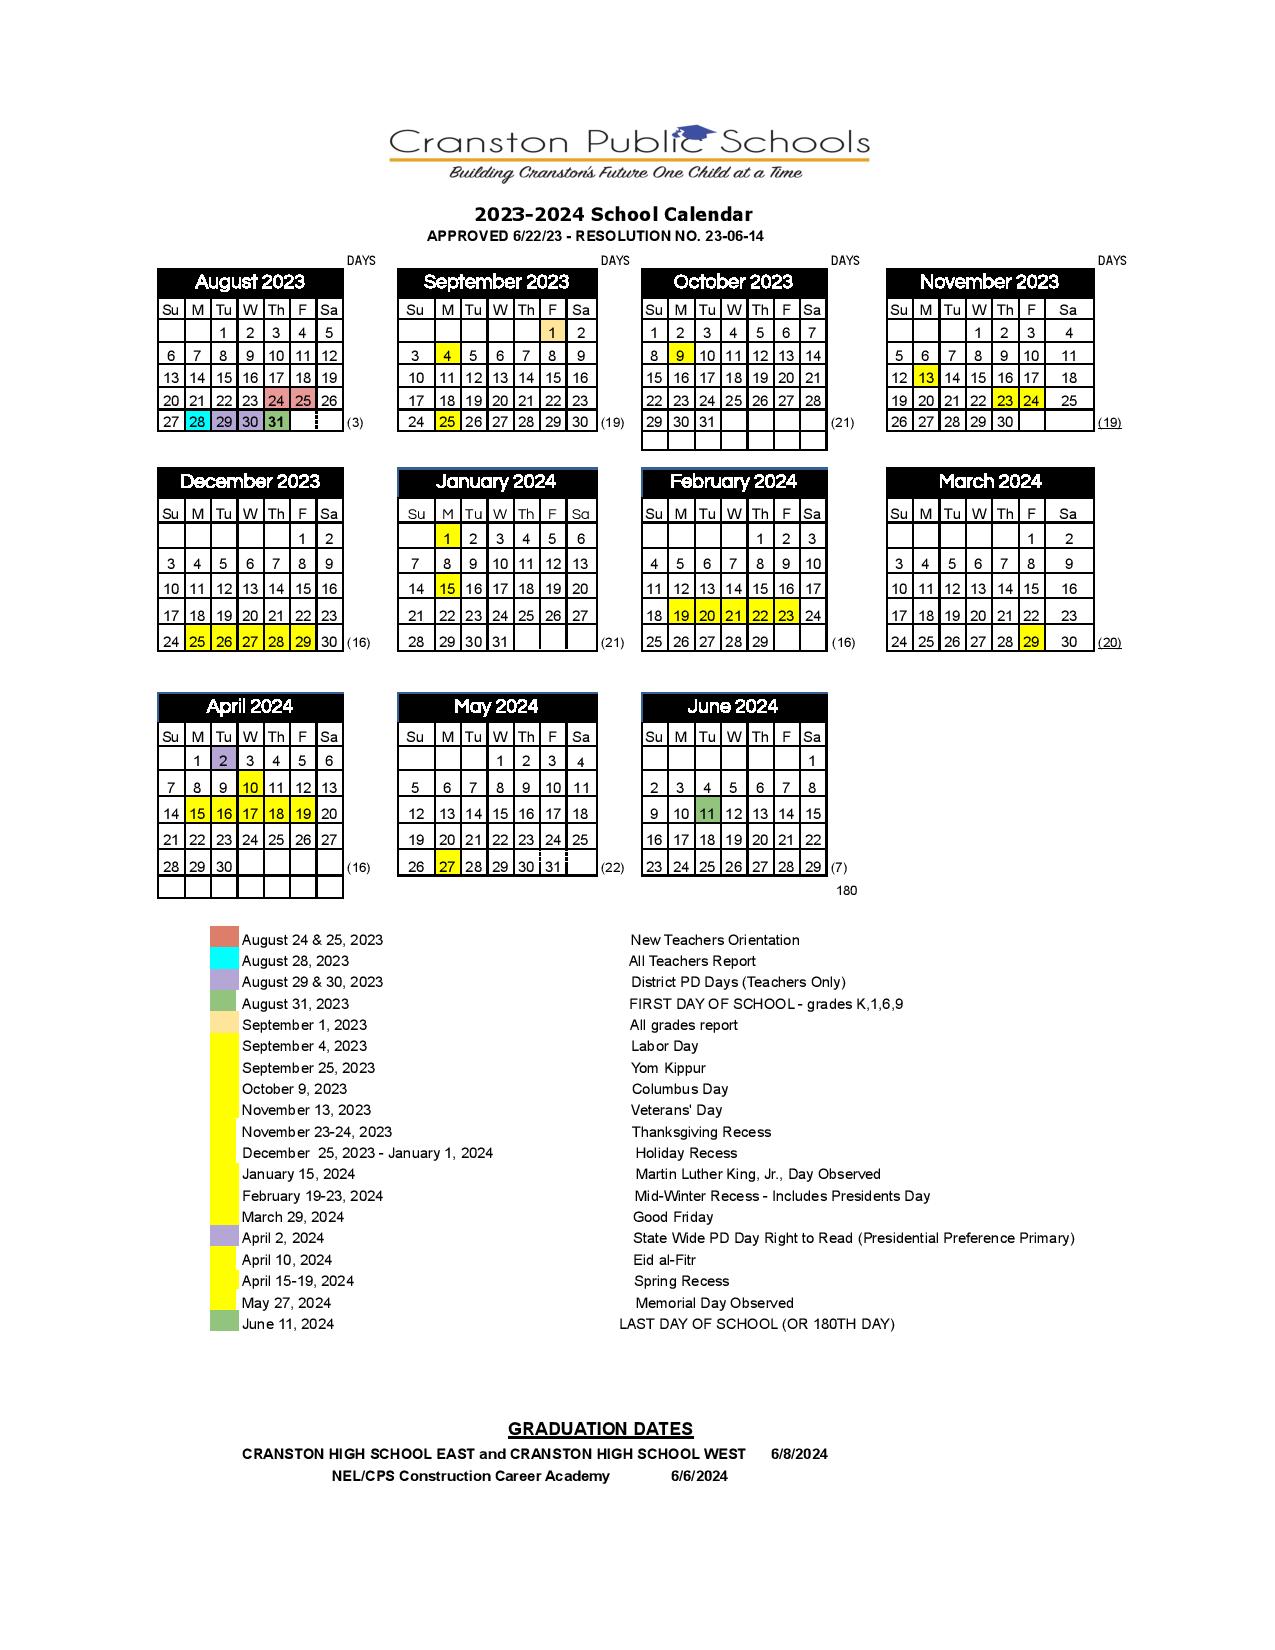 cranston-public-schools-calendar-2023-2024-in-pdf